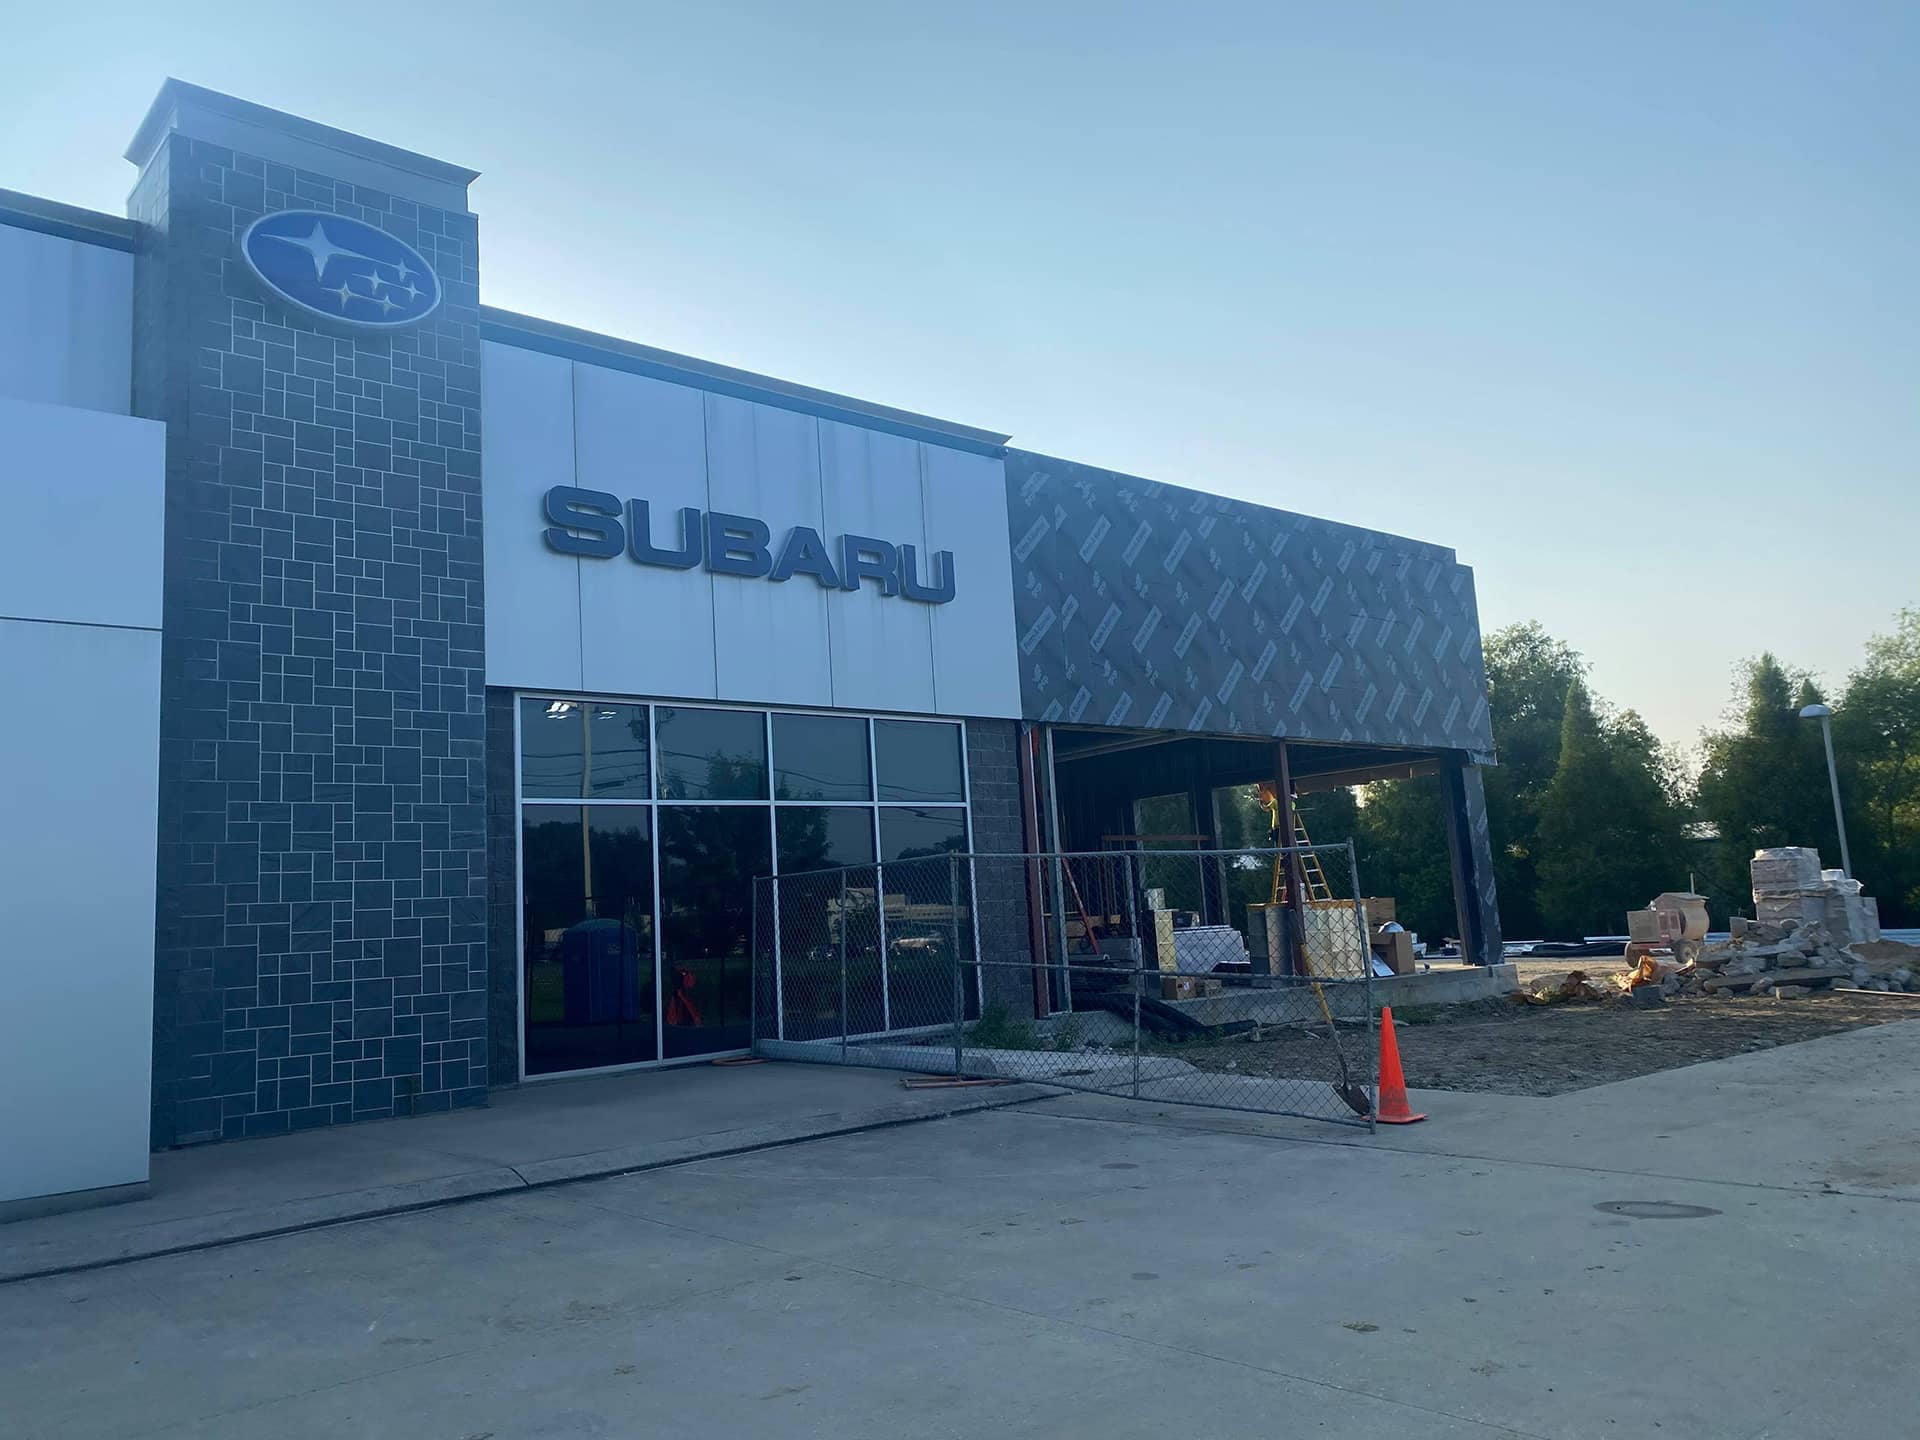 Subaru of Baton Rouge construction